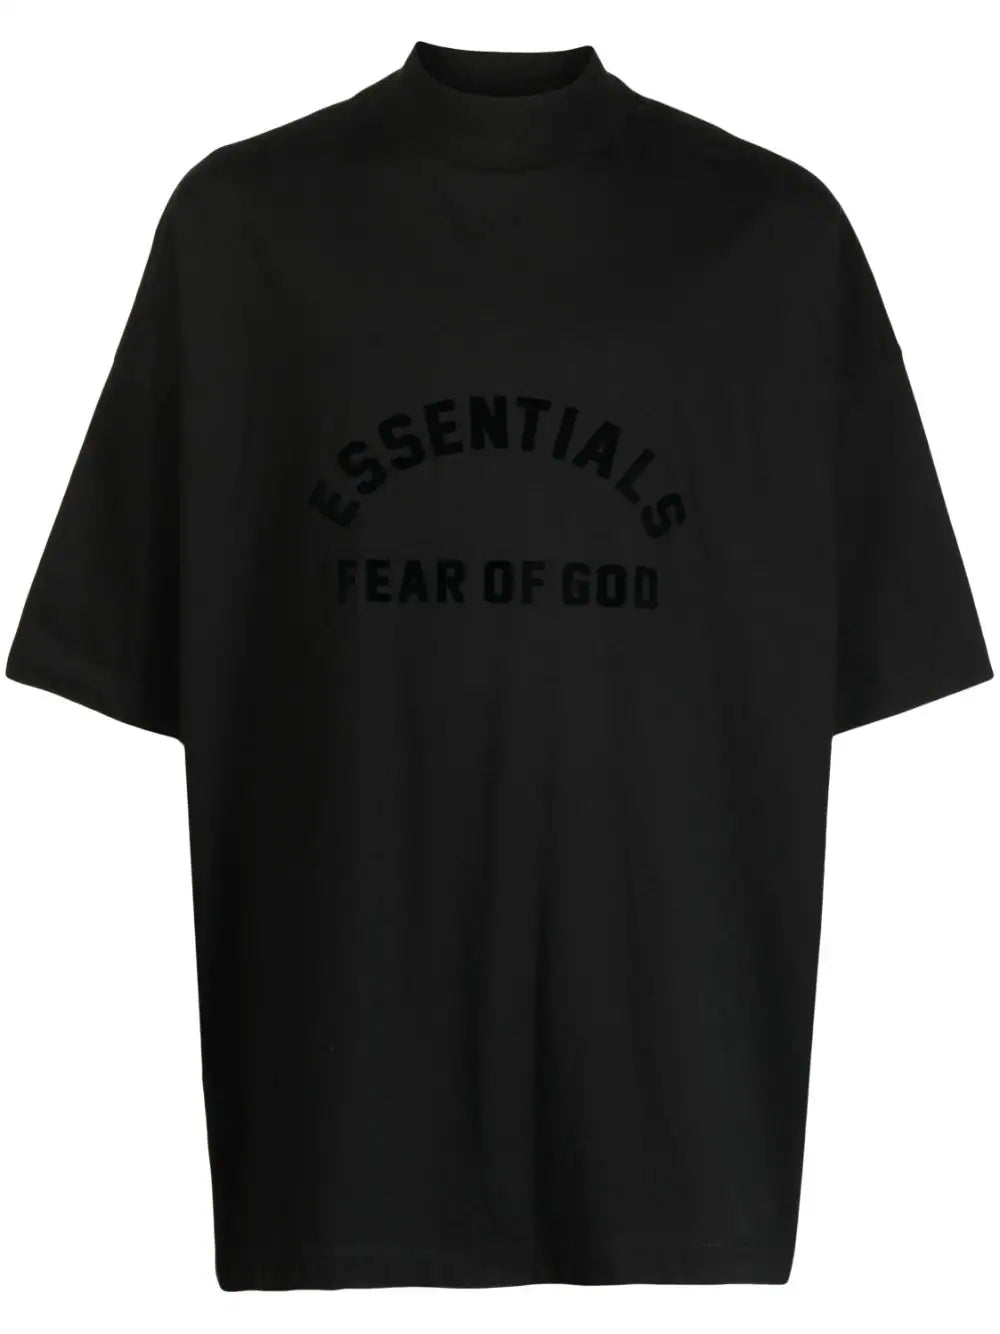 ESSENTIALS Black Bonded T-Shirt